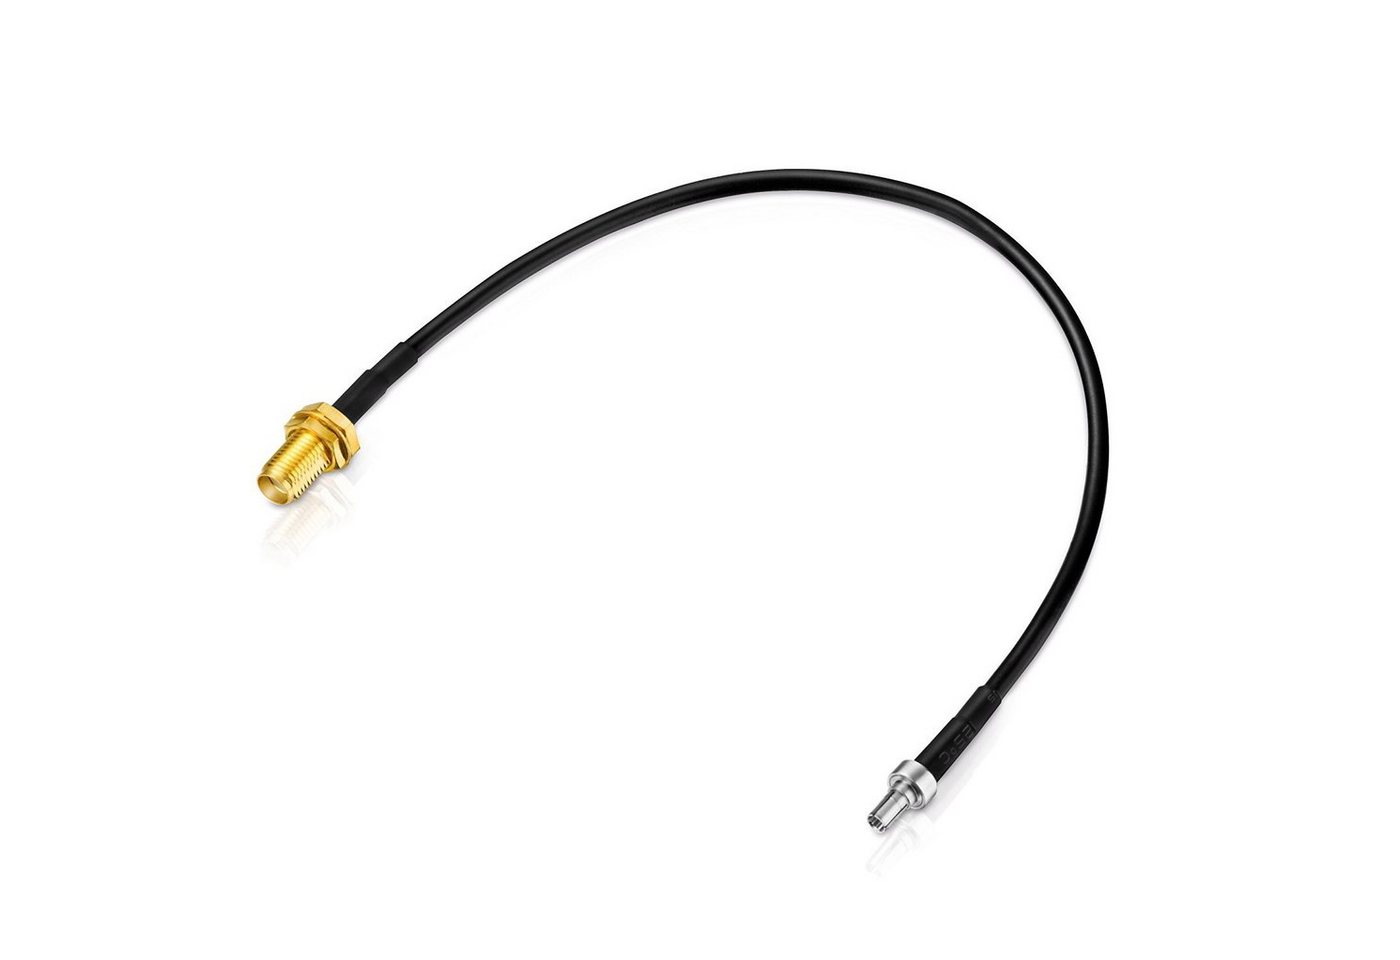 adaptare adaptare 60691 20 cm Pigtail CRC9-Stecker gerade / SMA-Buchse Adapter- SAT-Kabel von adaptare